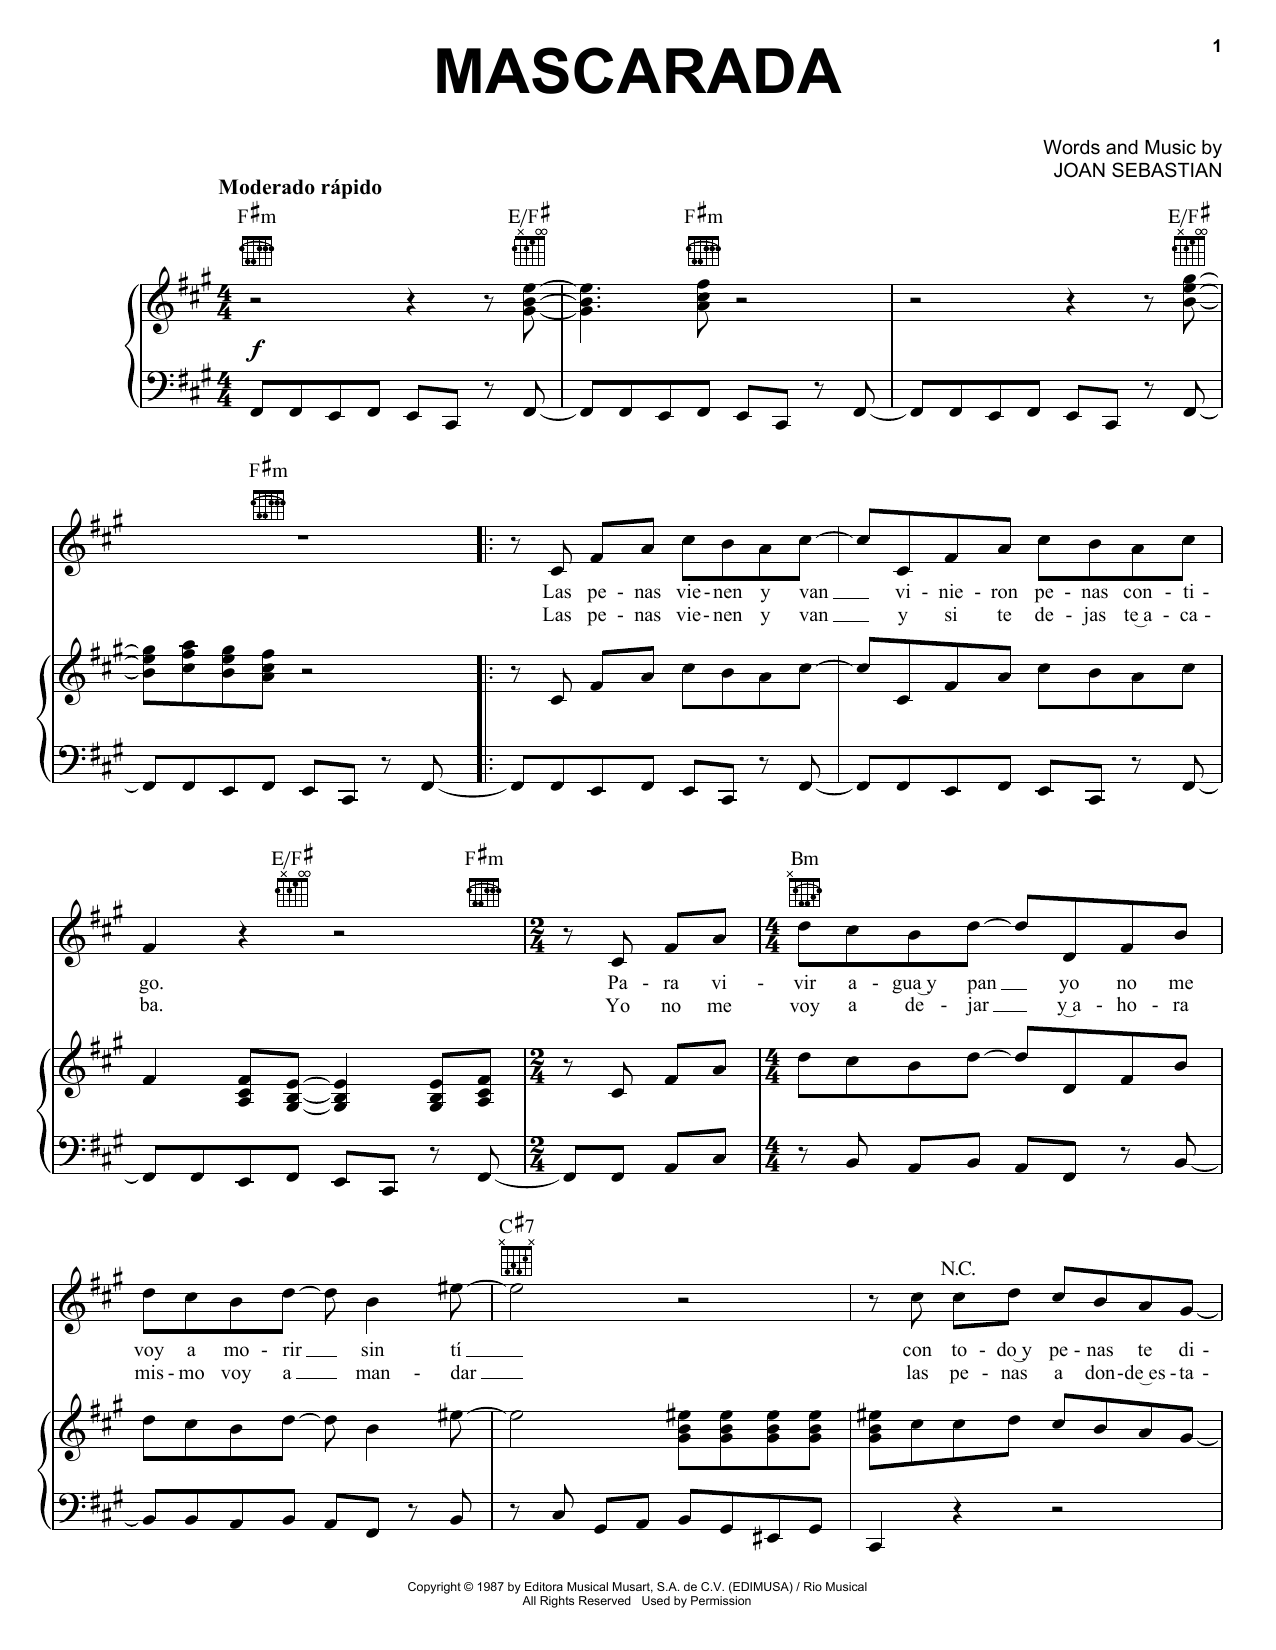 Joan Sebastian Mascarada Sheet Music Notes & Chords for Piano, Vocal & Guitar (Right-Hand Melody) - Download or Print PDF